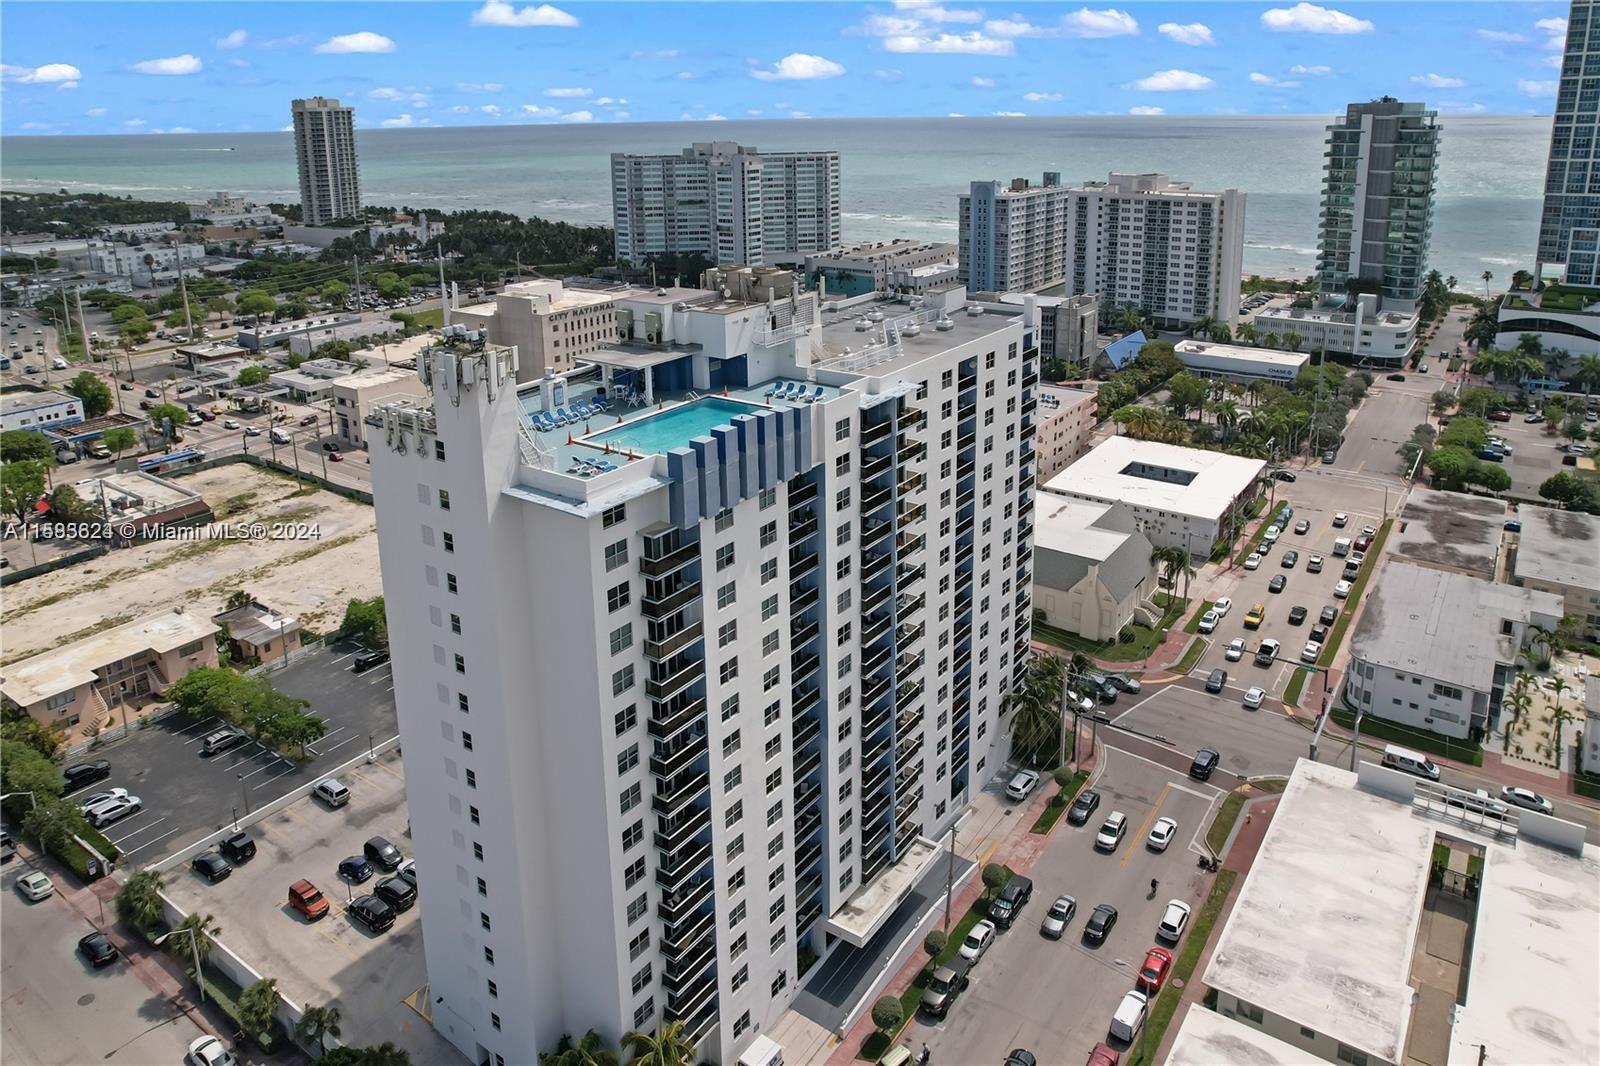 Rental Property at 401 69th St St 1213, Miami Beach, Miami-Dade County, Florida - Bedrooms: 2 
Bathrooms: 2  - $2,900 MO.